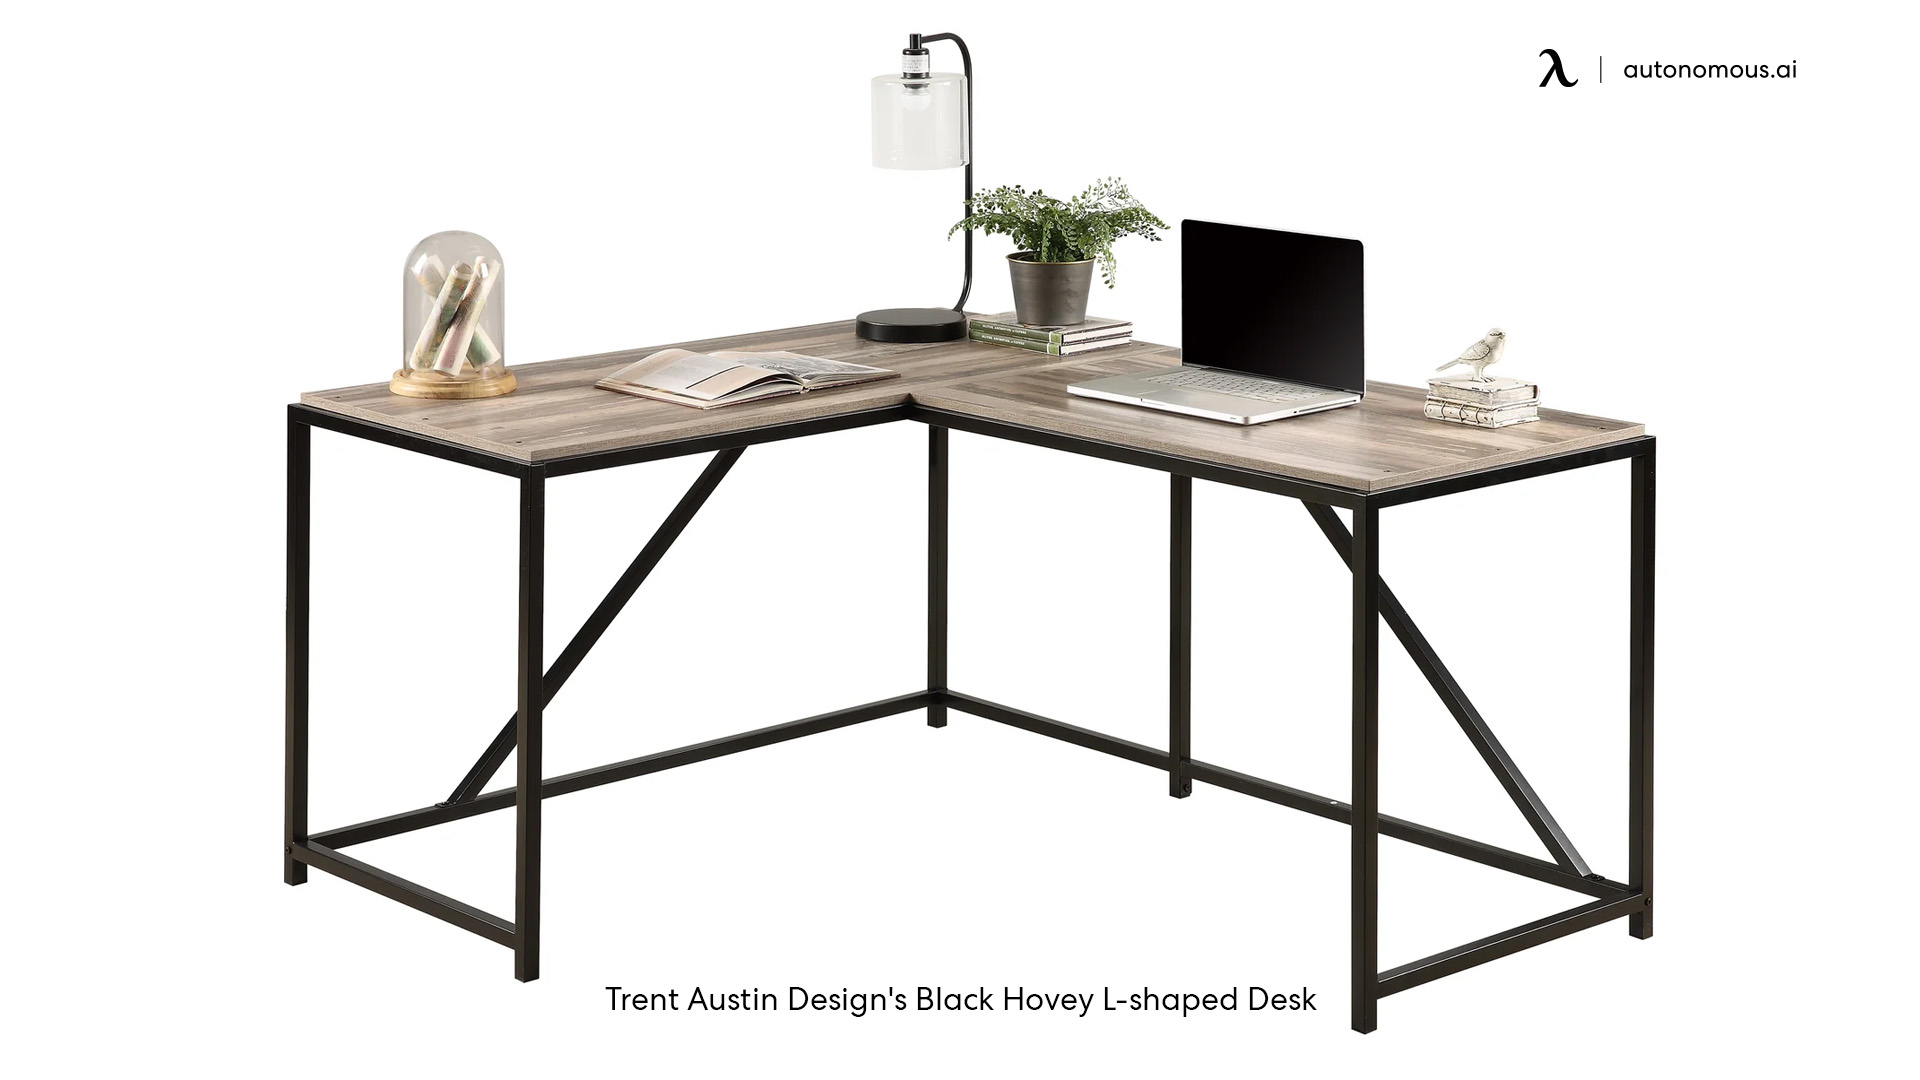 Trent Austin Design's Black Hovey L-shaped Desk